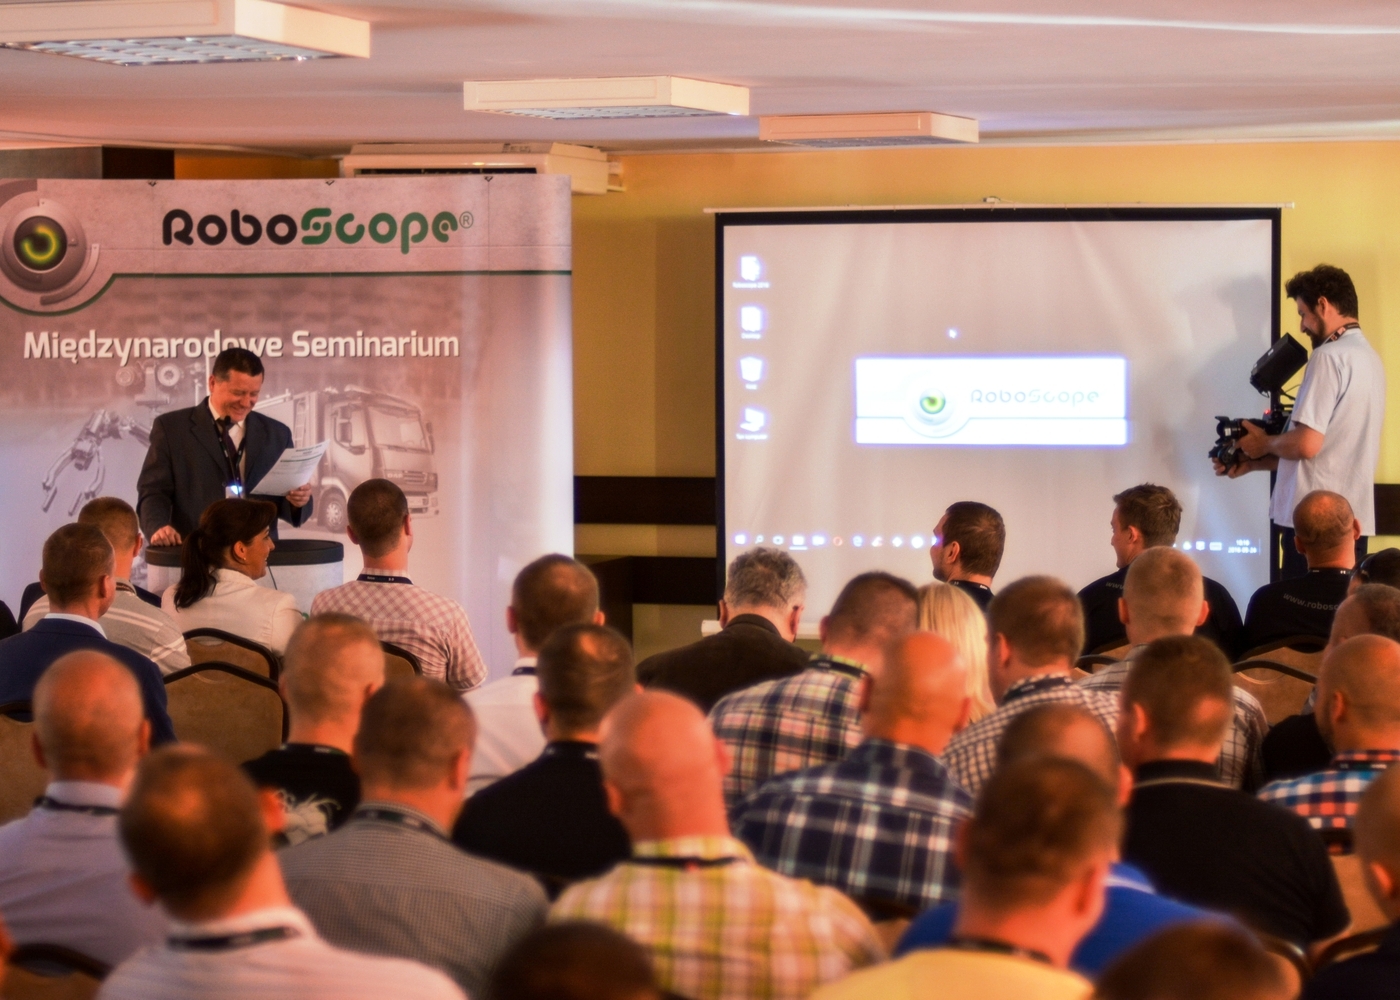 Oficial RoboScope 2016 Seminar opening (photo: PIAP)